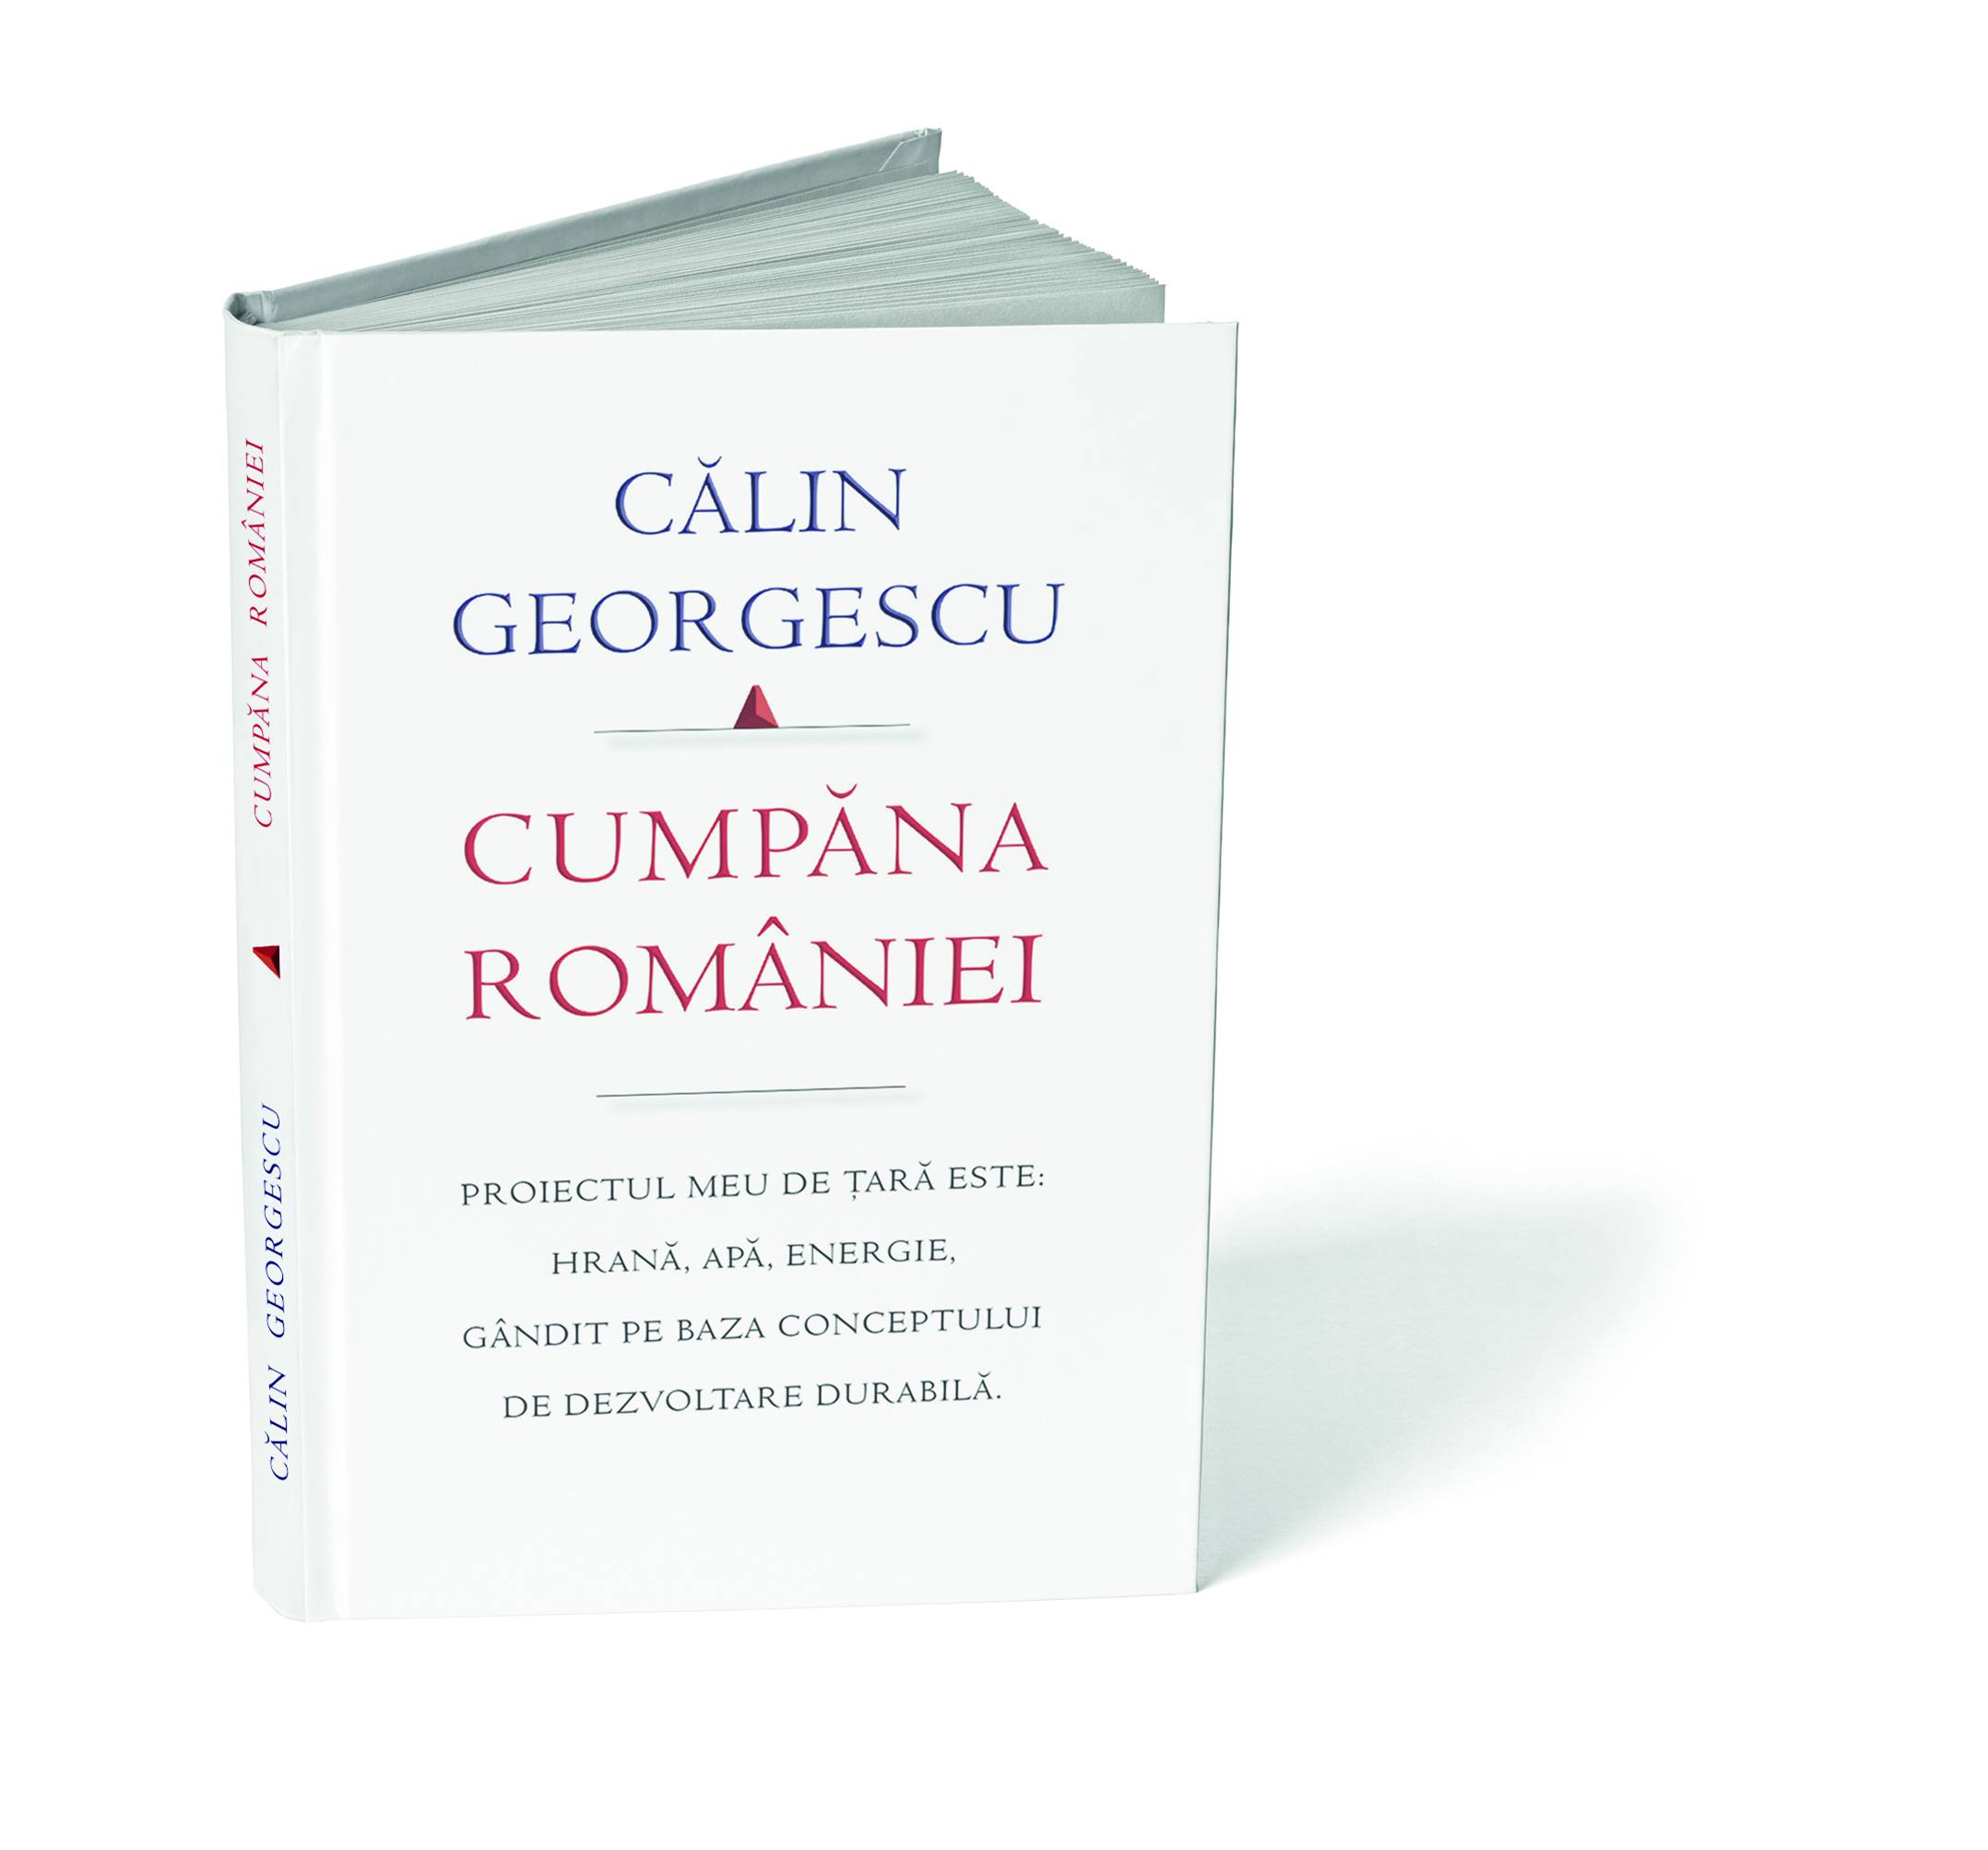 Cumpana romaniei - carte - calin georgescu